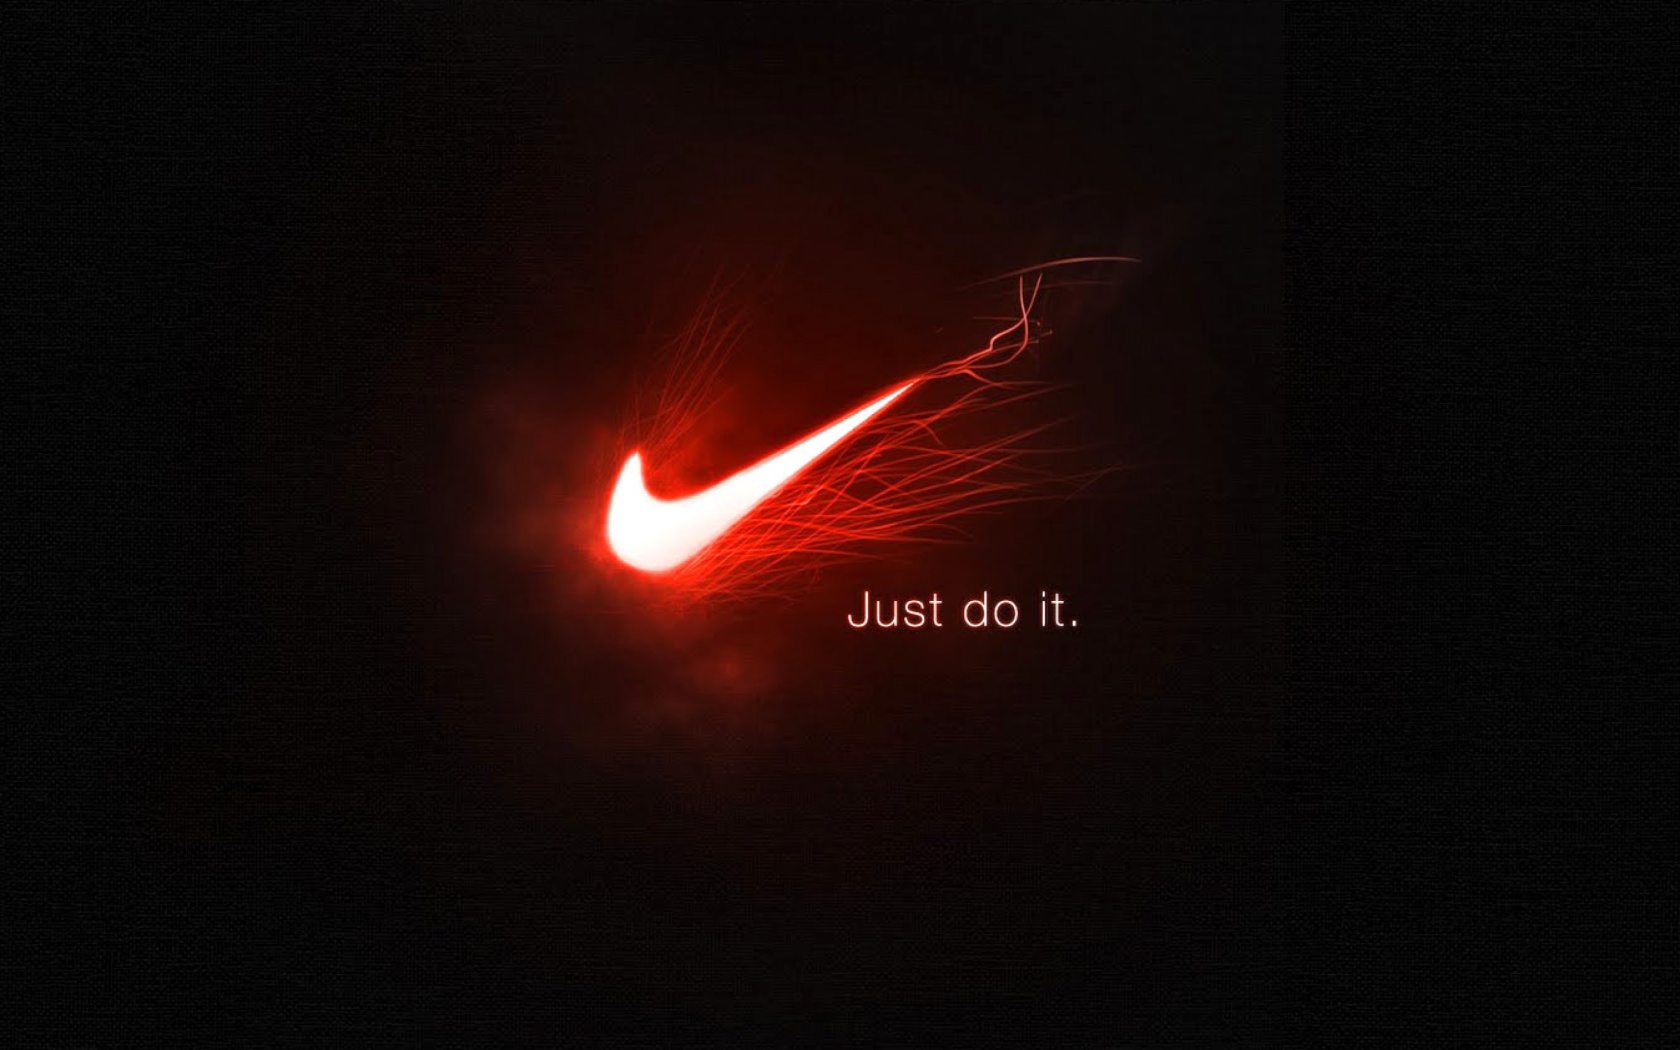 Das Nike Advertising Slogan Just Do It Wallpaper 1680x1050